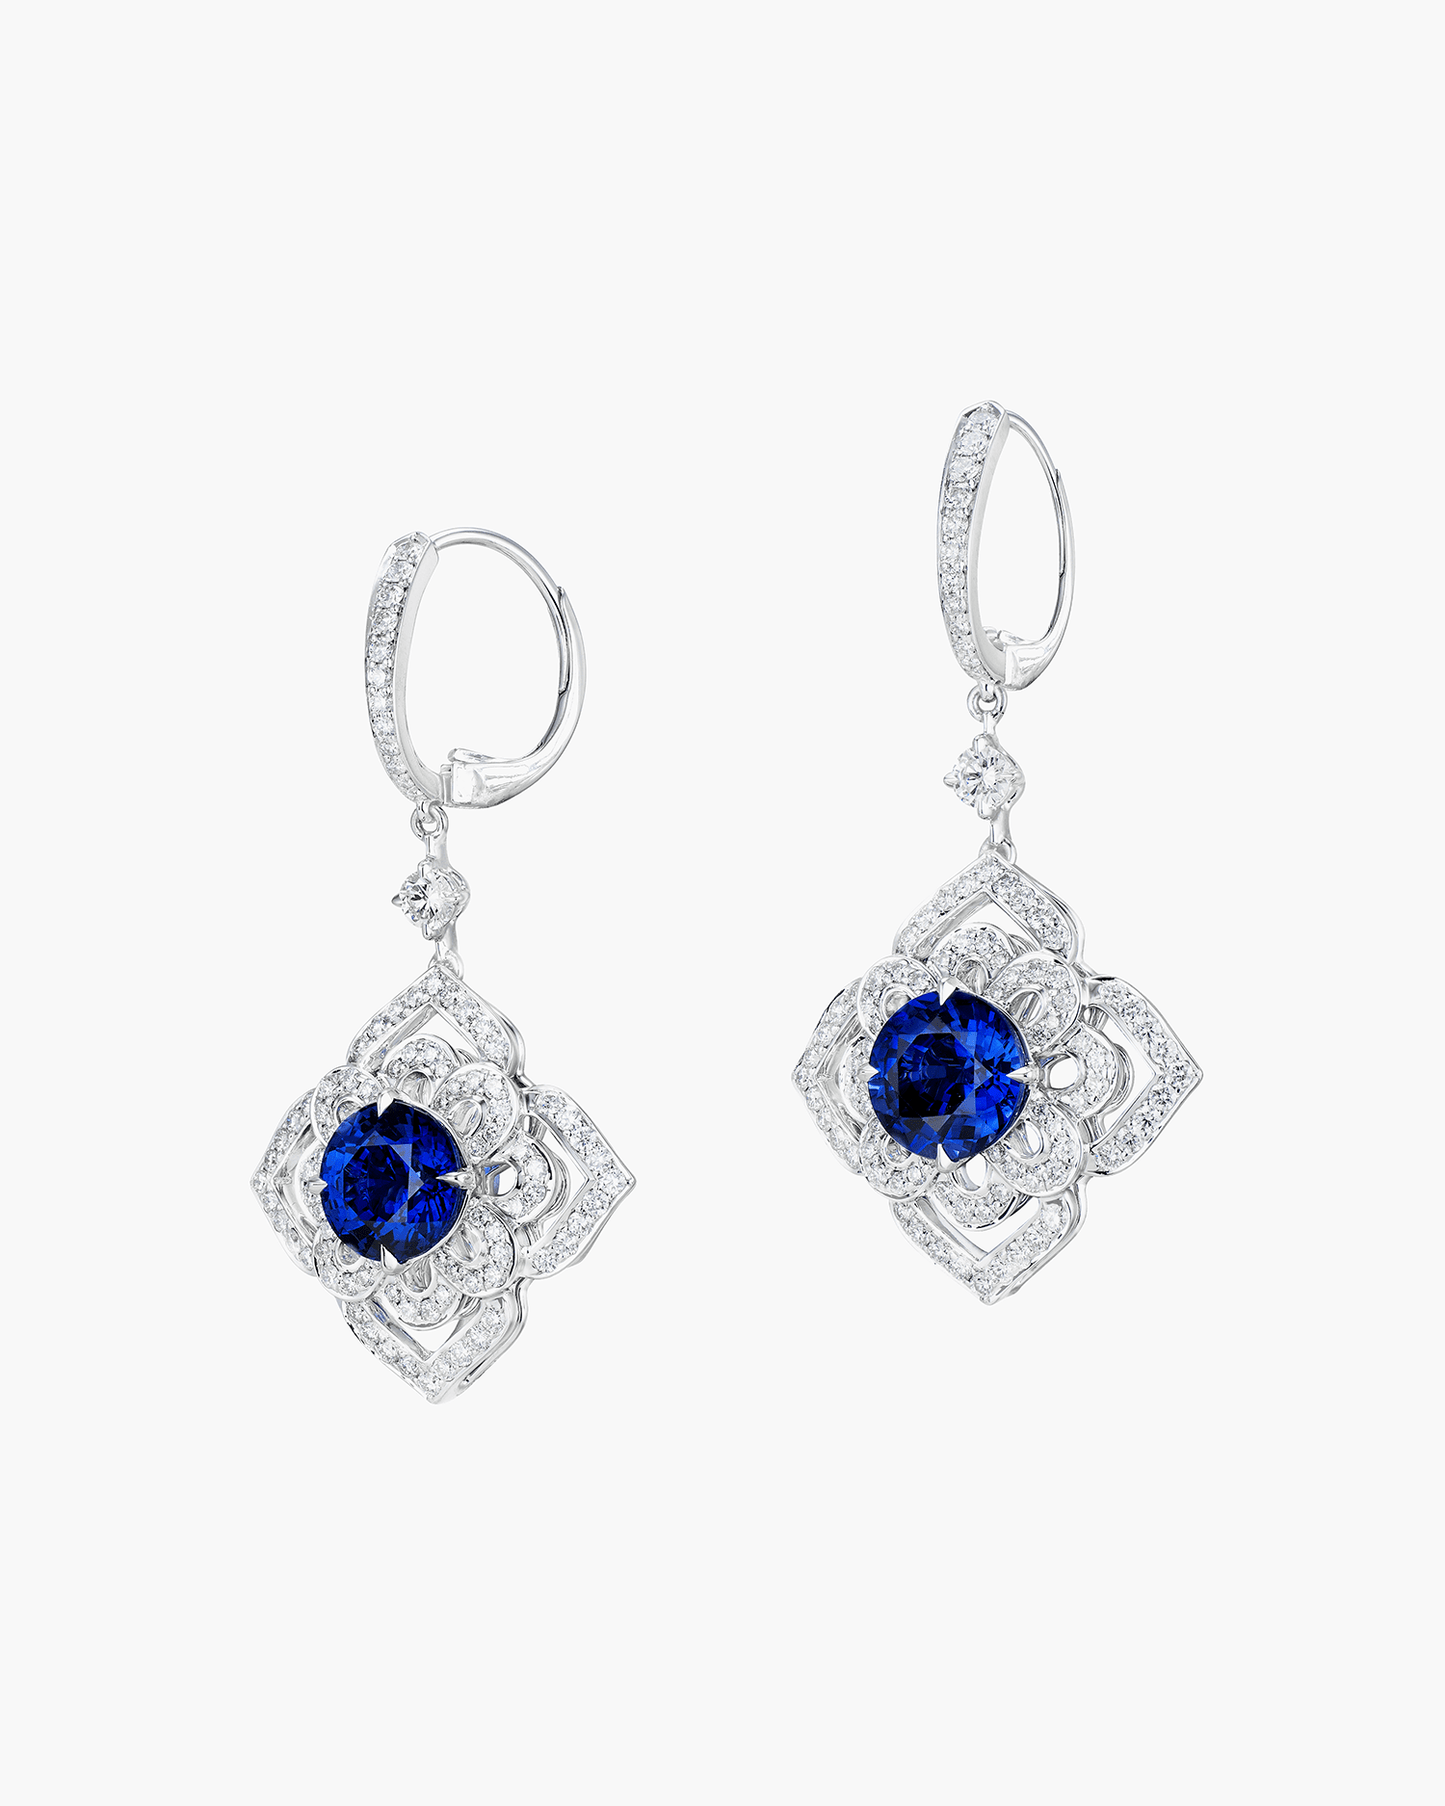 4.12 carat Round Cut Ceylon Sapphire and Diamond Lotus Earrings